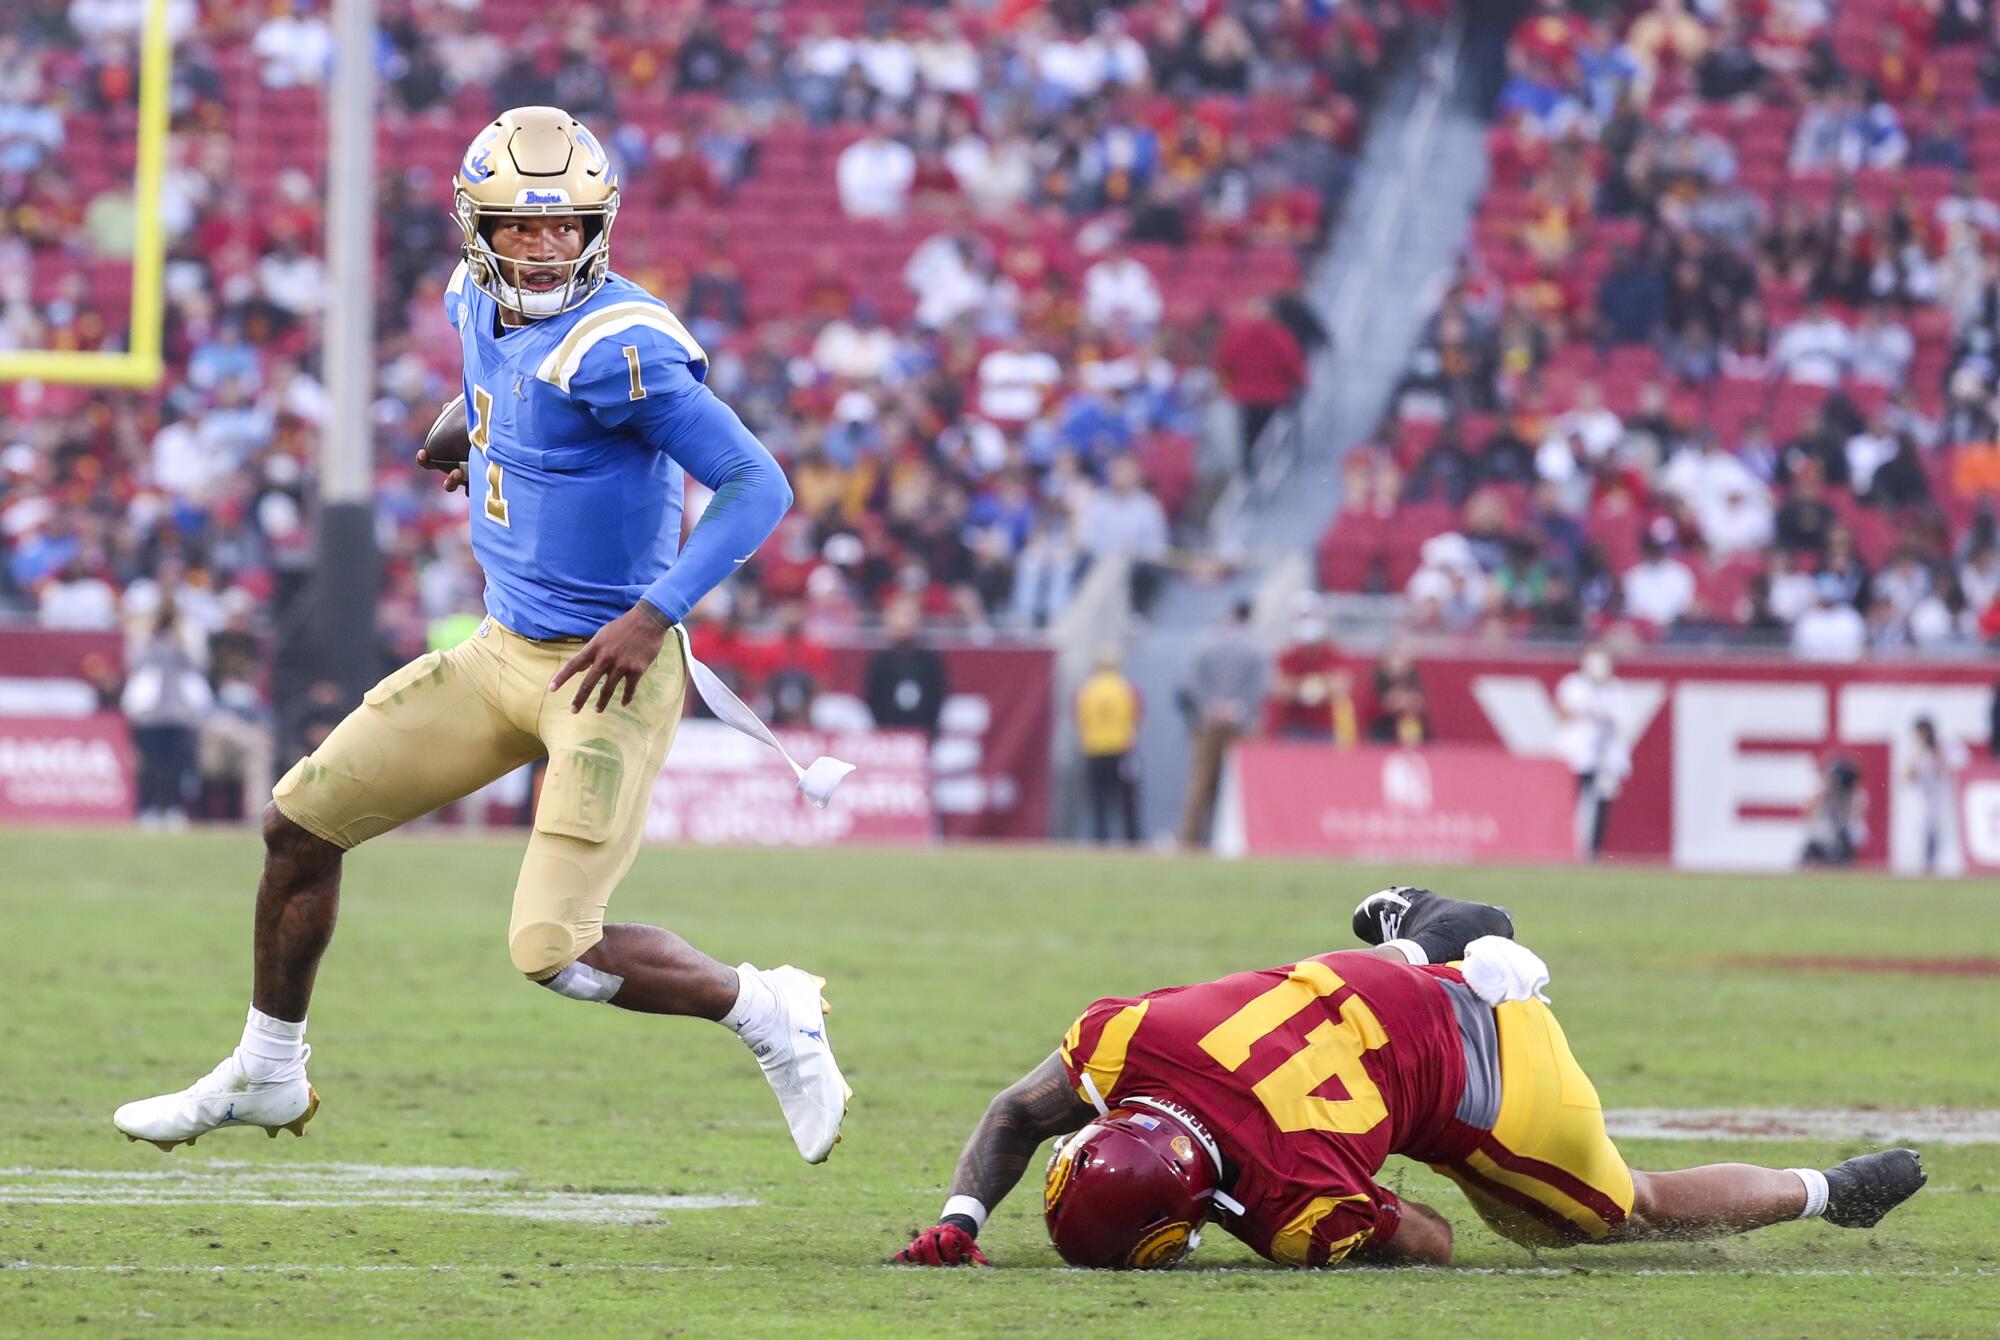  UCLA quarterback Dorian Thompson-Robinson escapes a tackle.